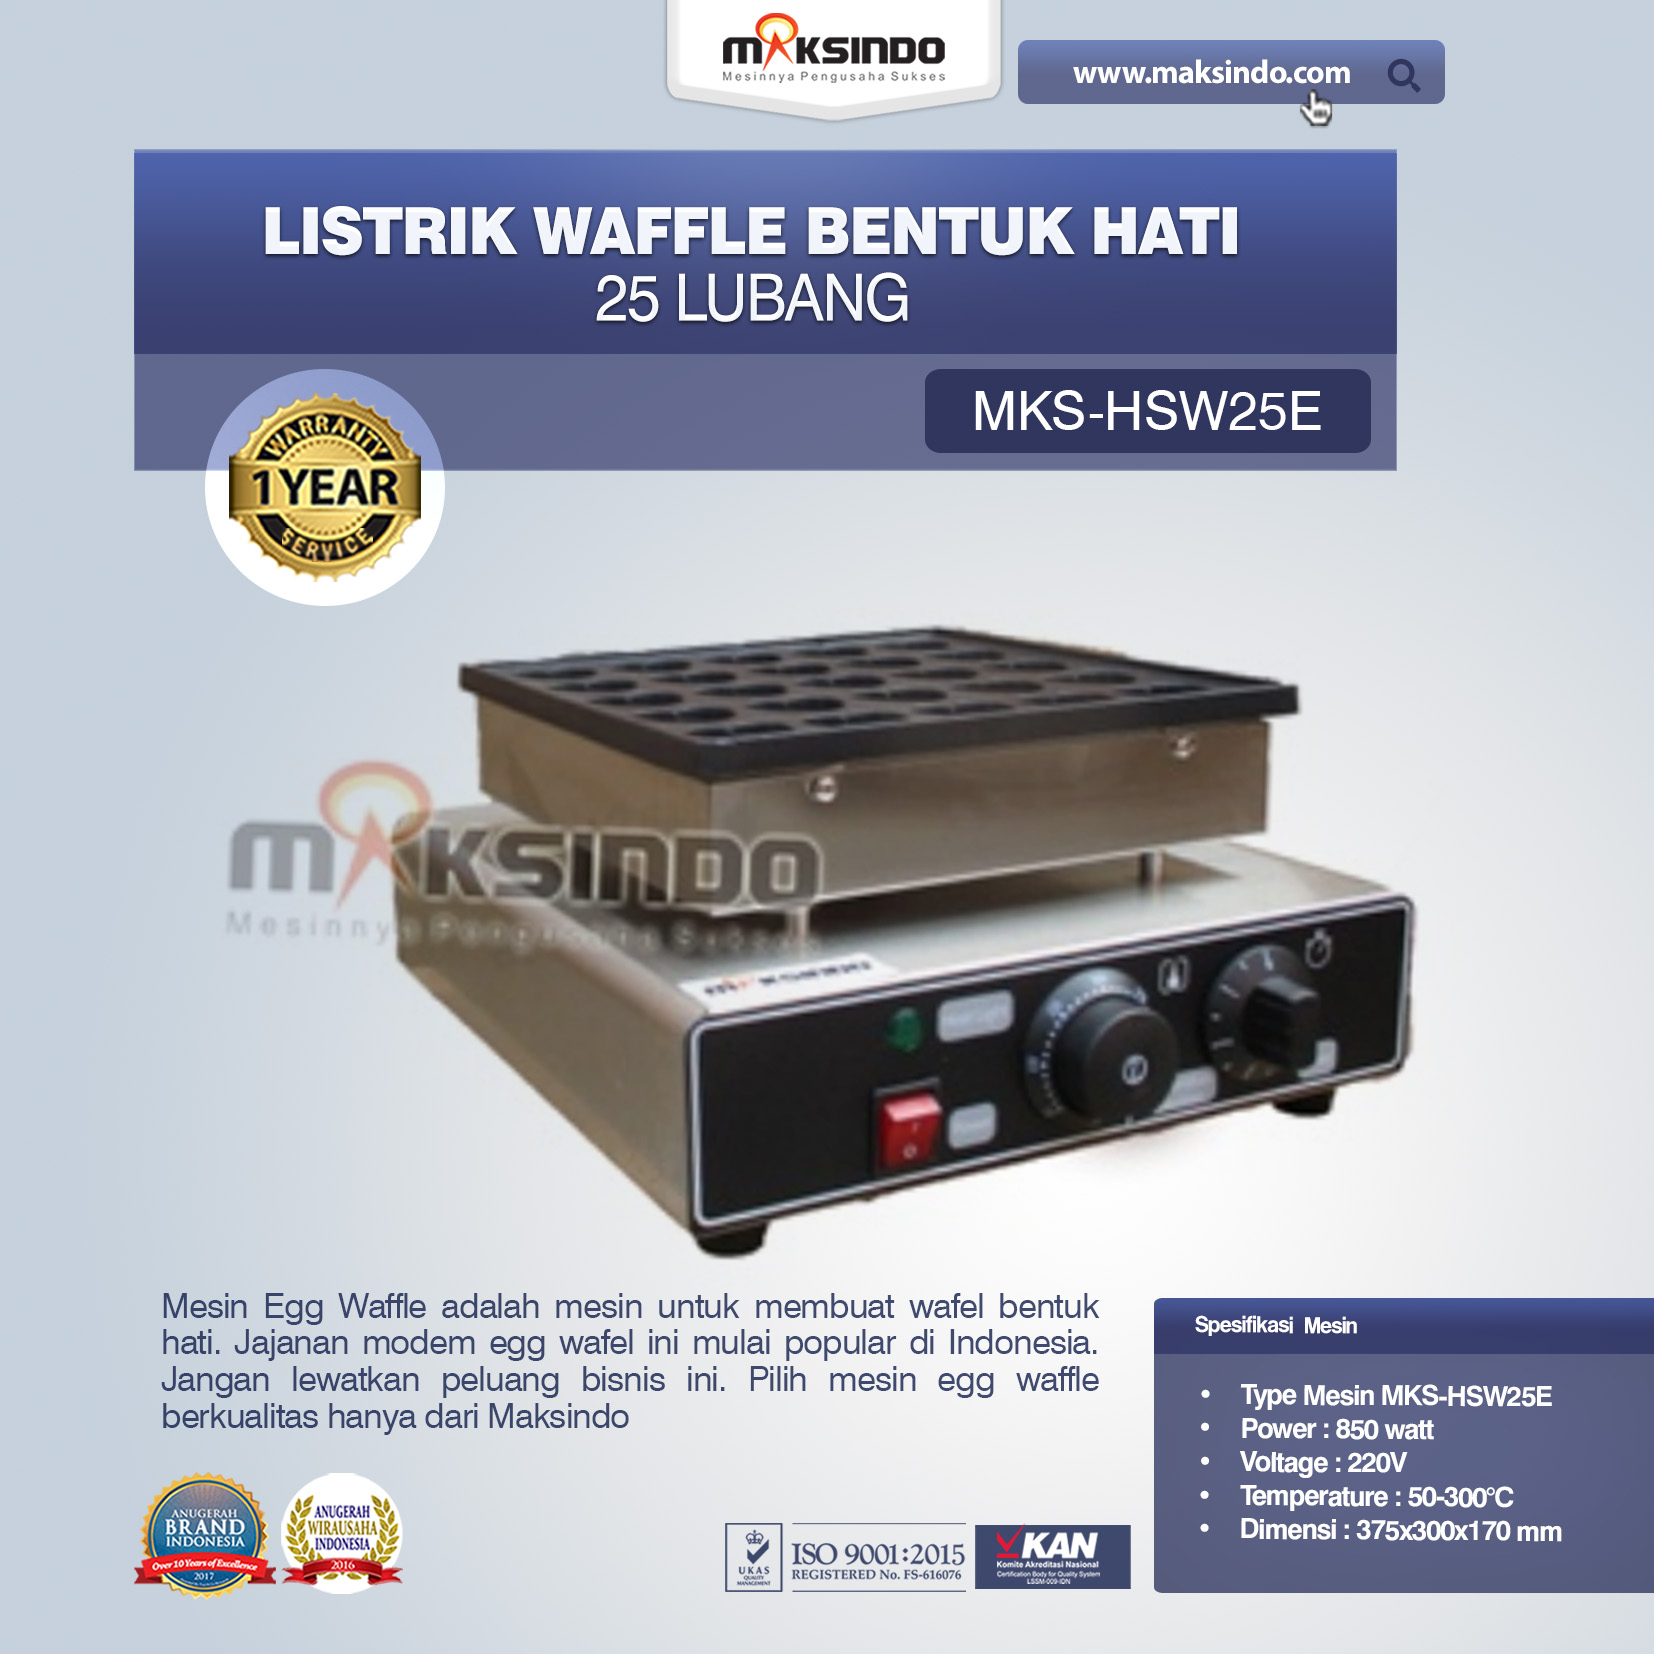 Jual Listrik Waffle Bentuk Hati 25 Lubang MKS-HSW25E di Yogyakarta